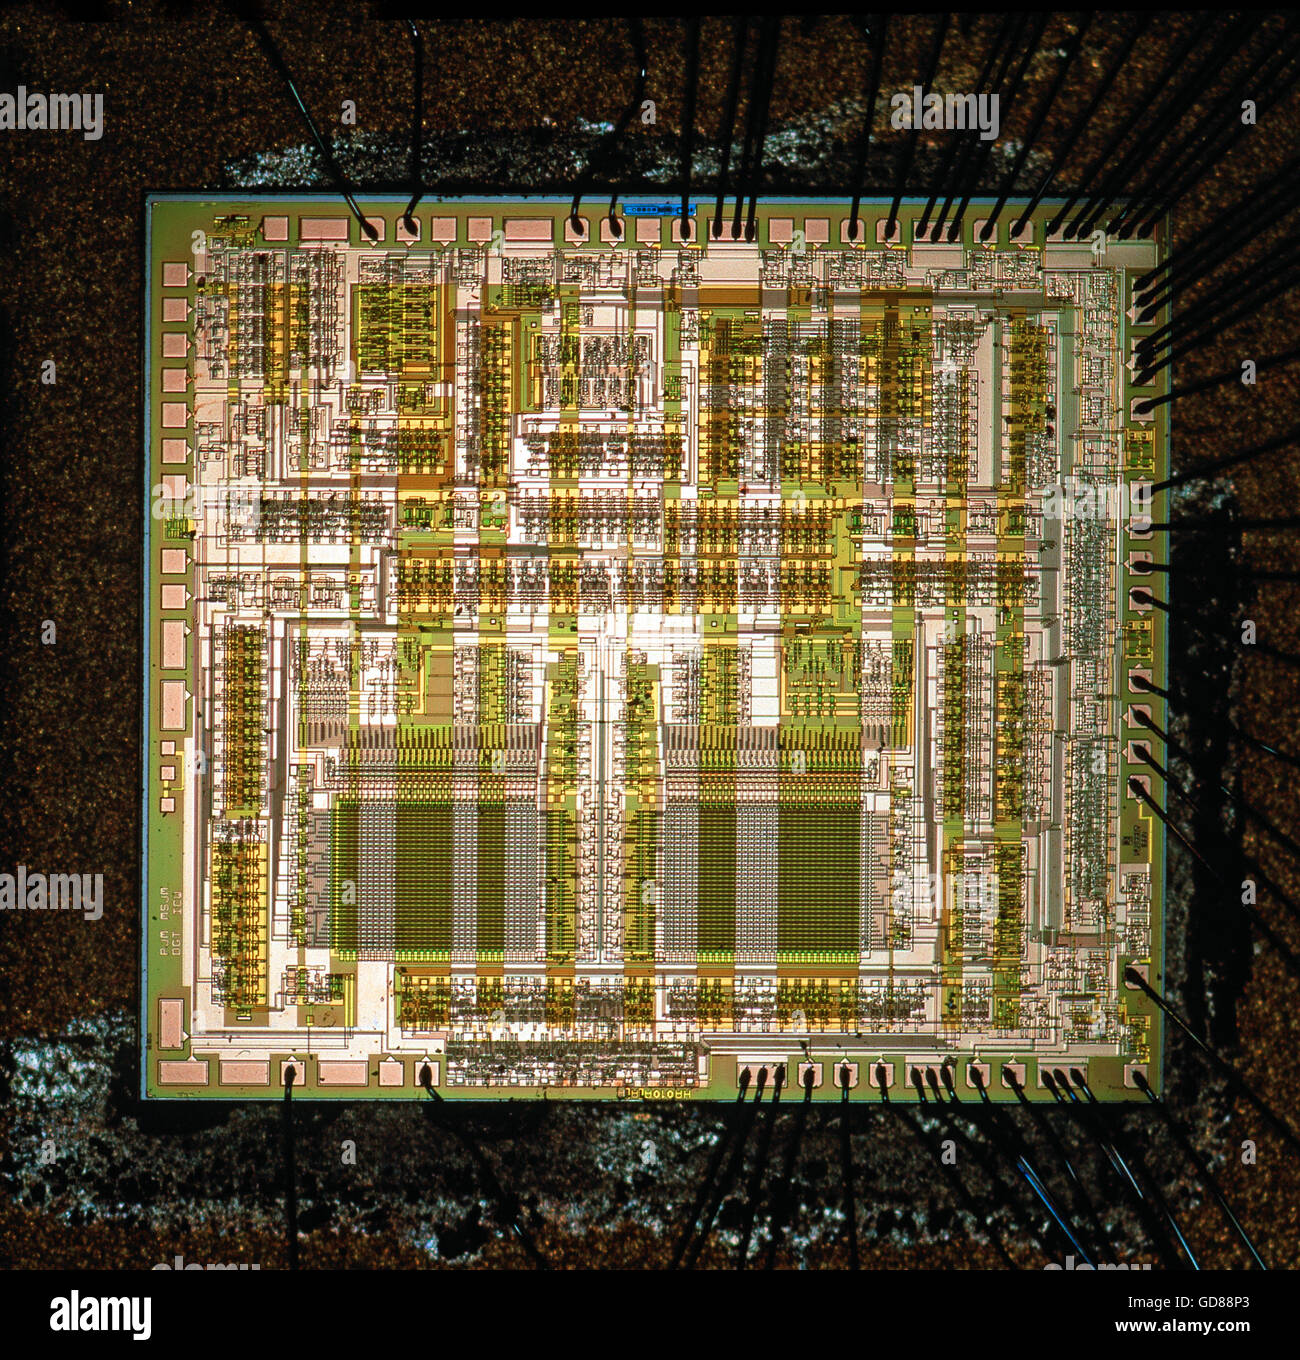 Semi conductor silicon chip integrated circuit Stock Photo